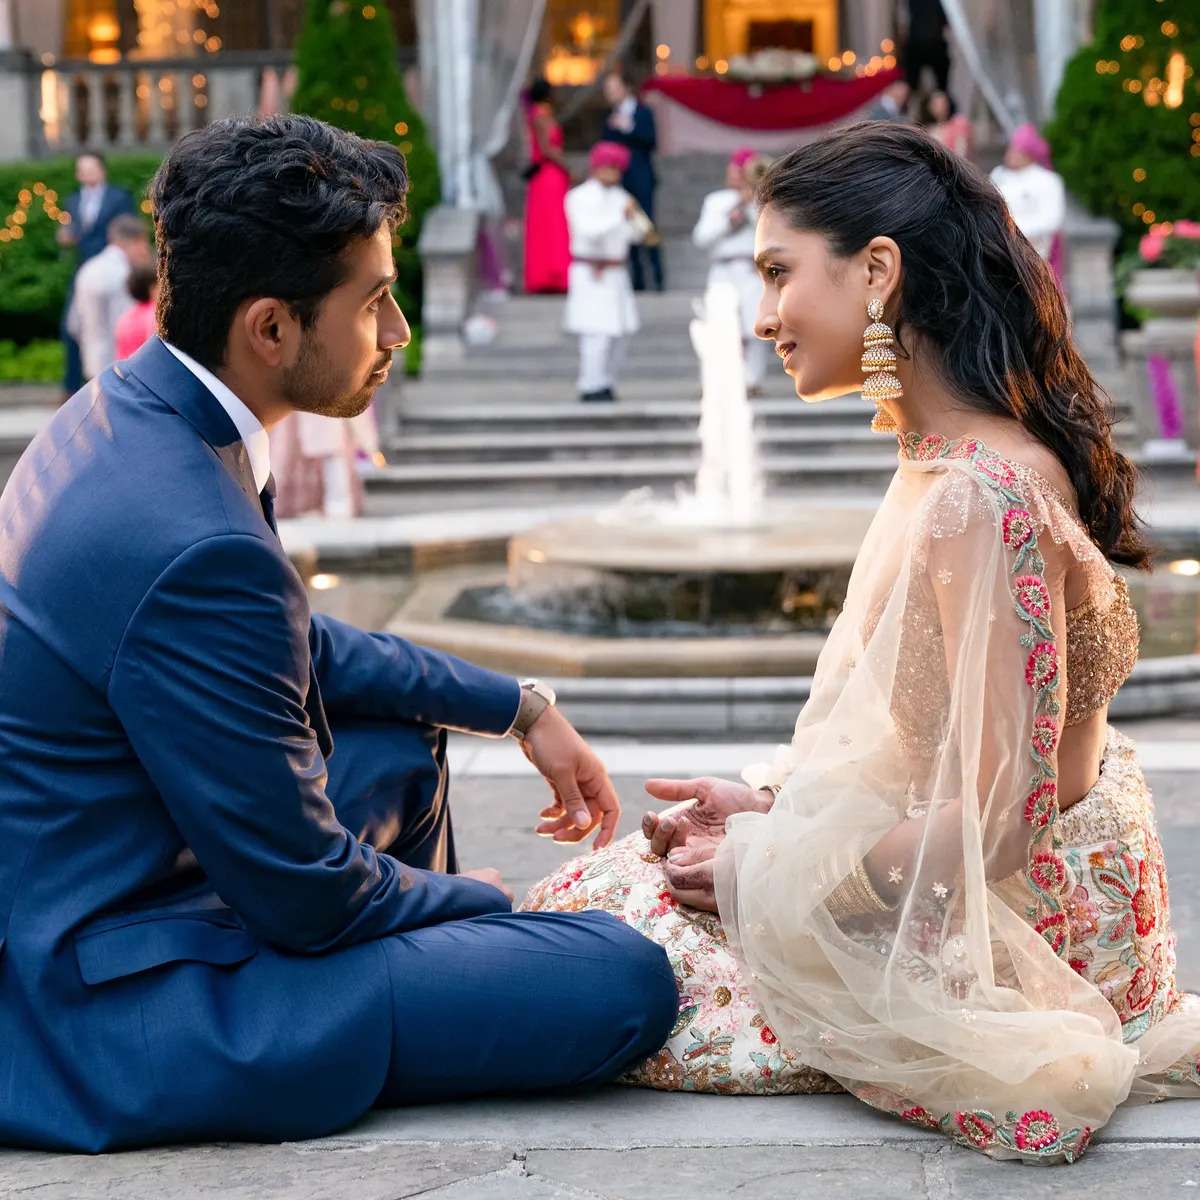 Why Did Asha and Krish Breakup in Wedding Season?